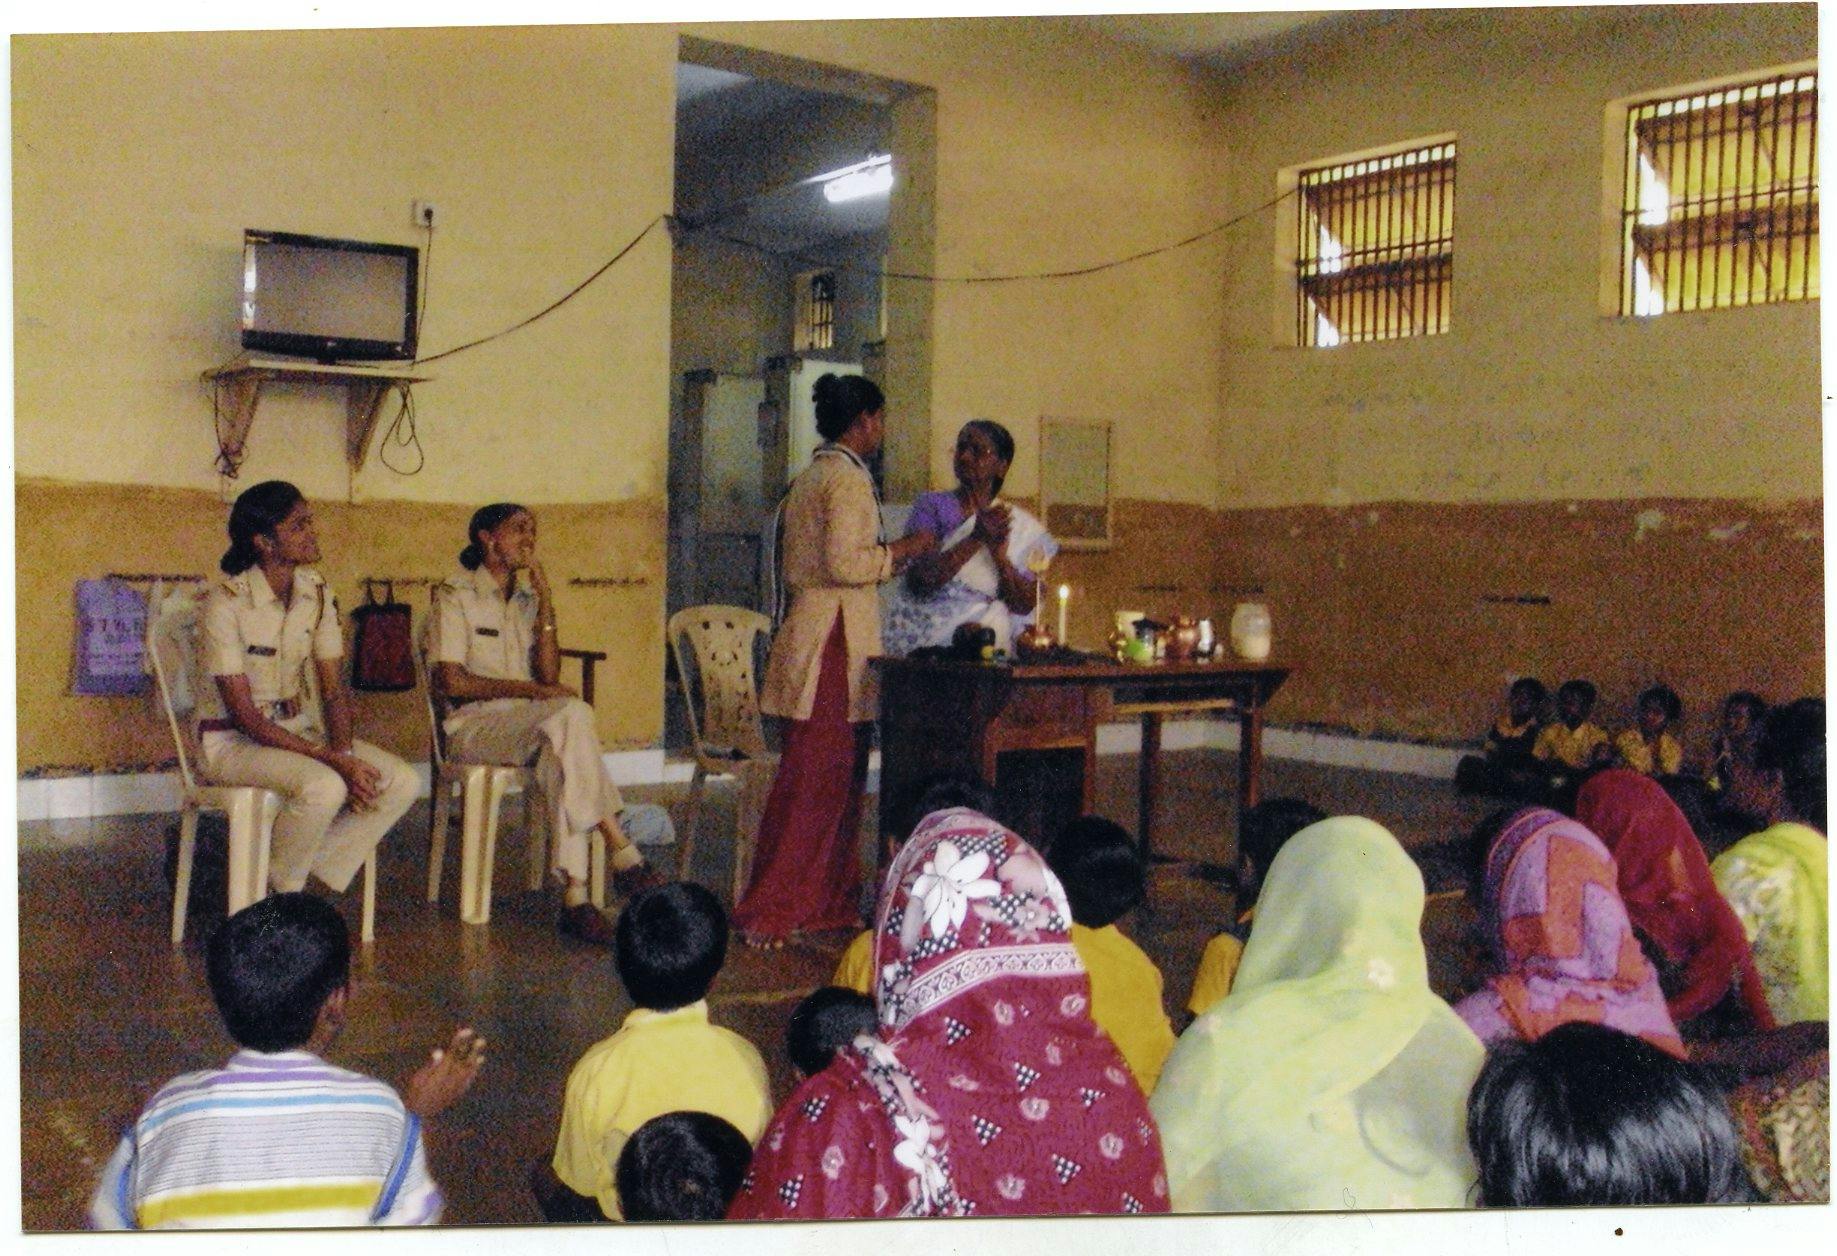 Activist Vandana Shinde during an anti-superstition session at a women's prison in Maharashtra, India (from Mumbai-based NGO Sevadham)